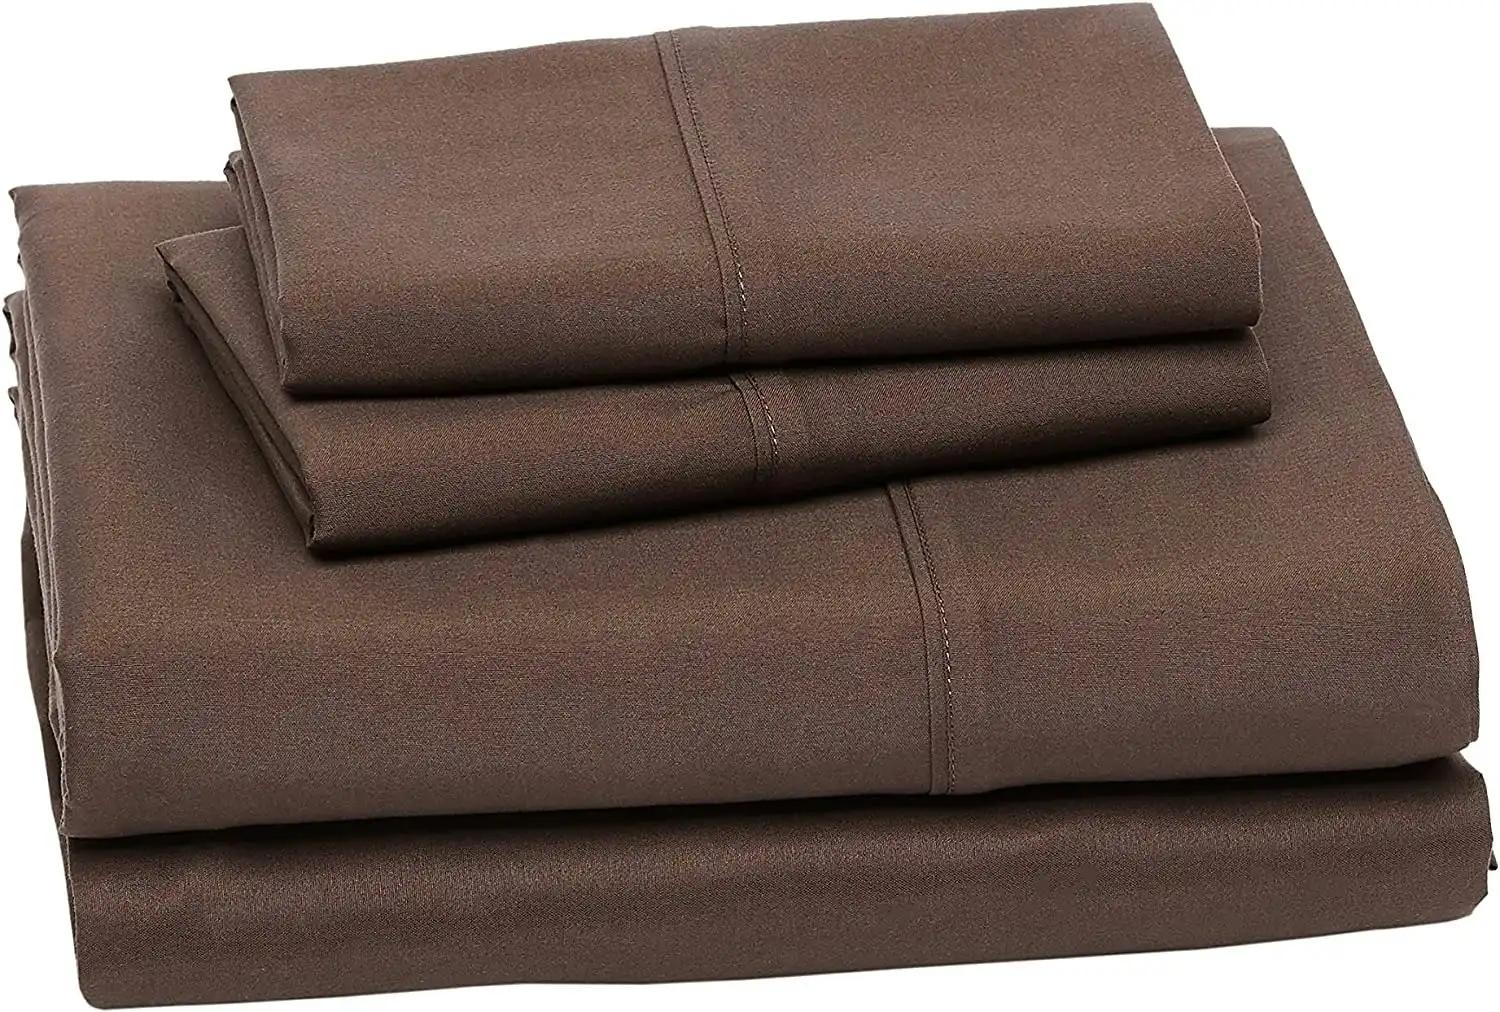 King Size Microfiber Bed Sheet Set Lightweight Super Soft Easy Care, 36 cm Deep Pockets Chocolate